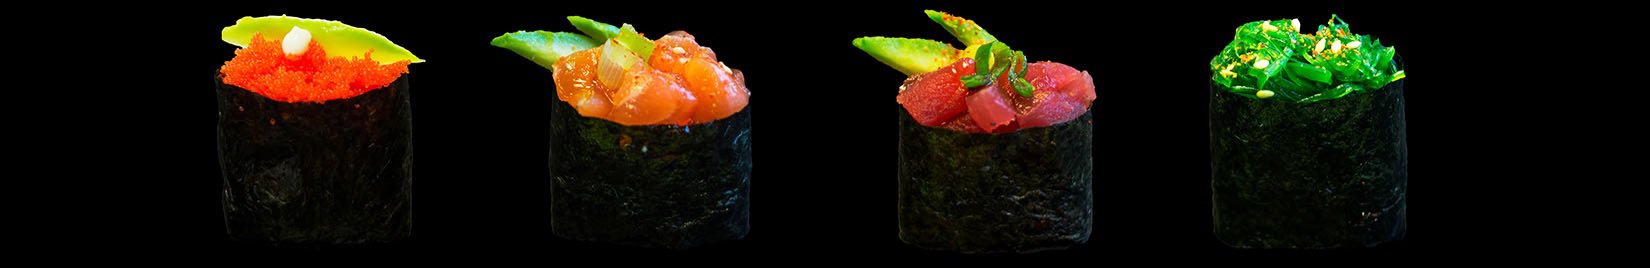 Gunkan - I Love Sushi & Wok Wageningen